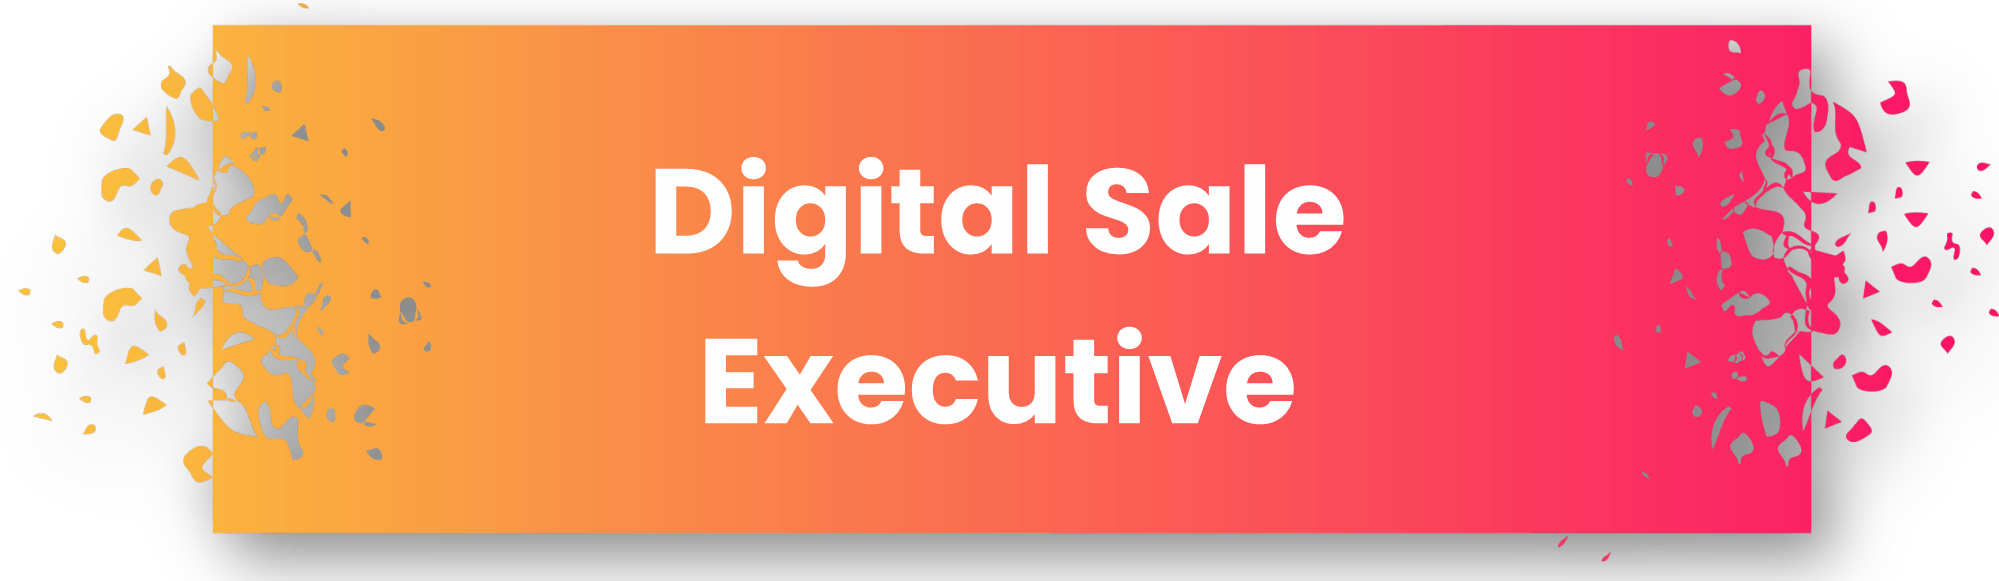 Digital Sale